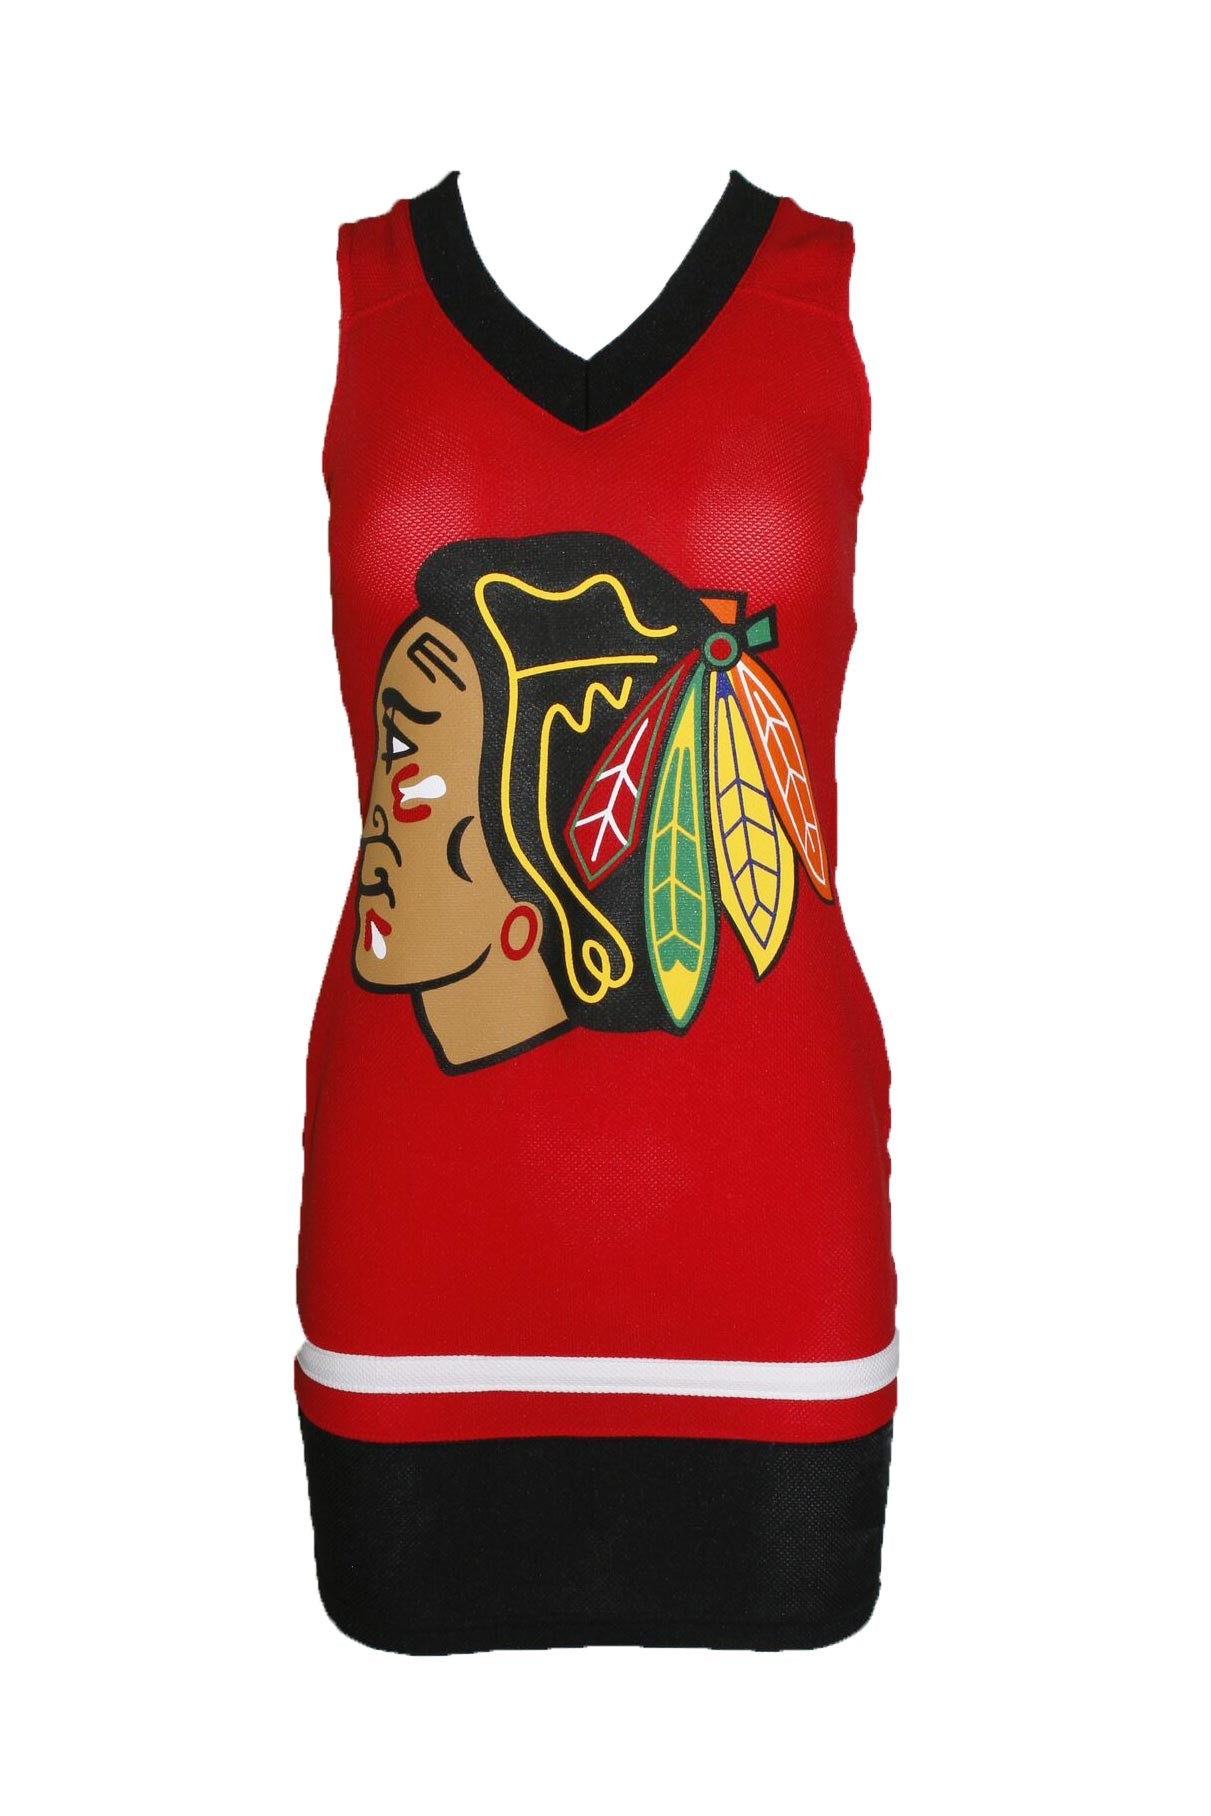 chicago blackhawks jersey dress Online 